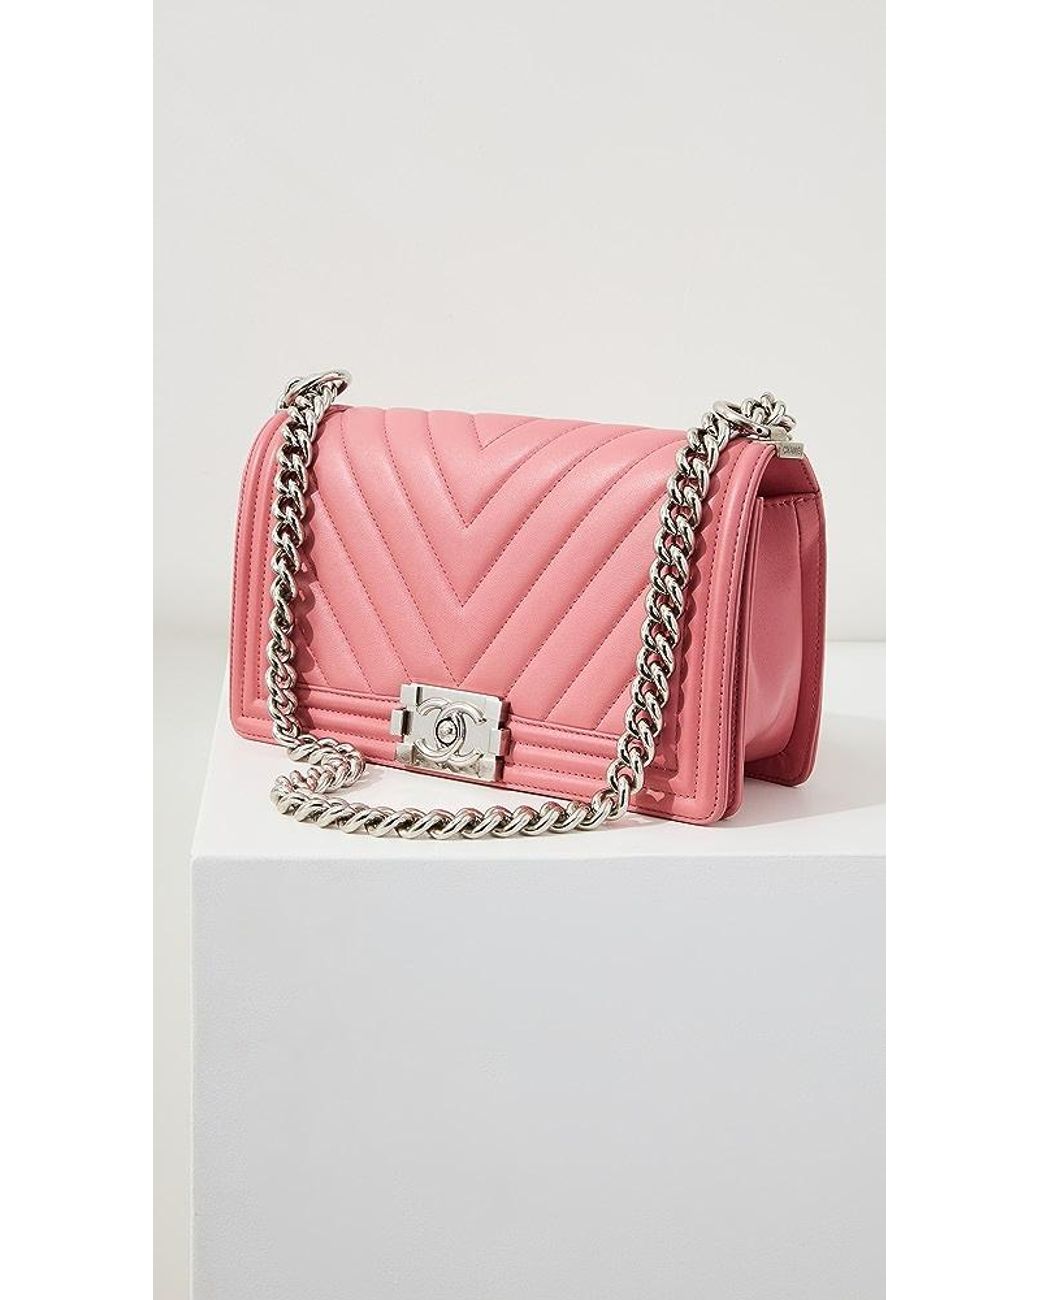 Chanel Red Lambskin Rectangular Flap Mini Bag